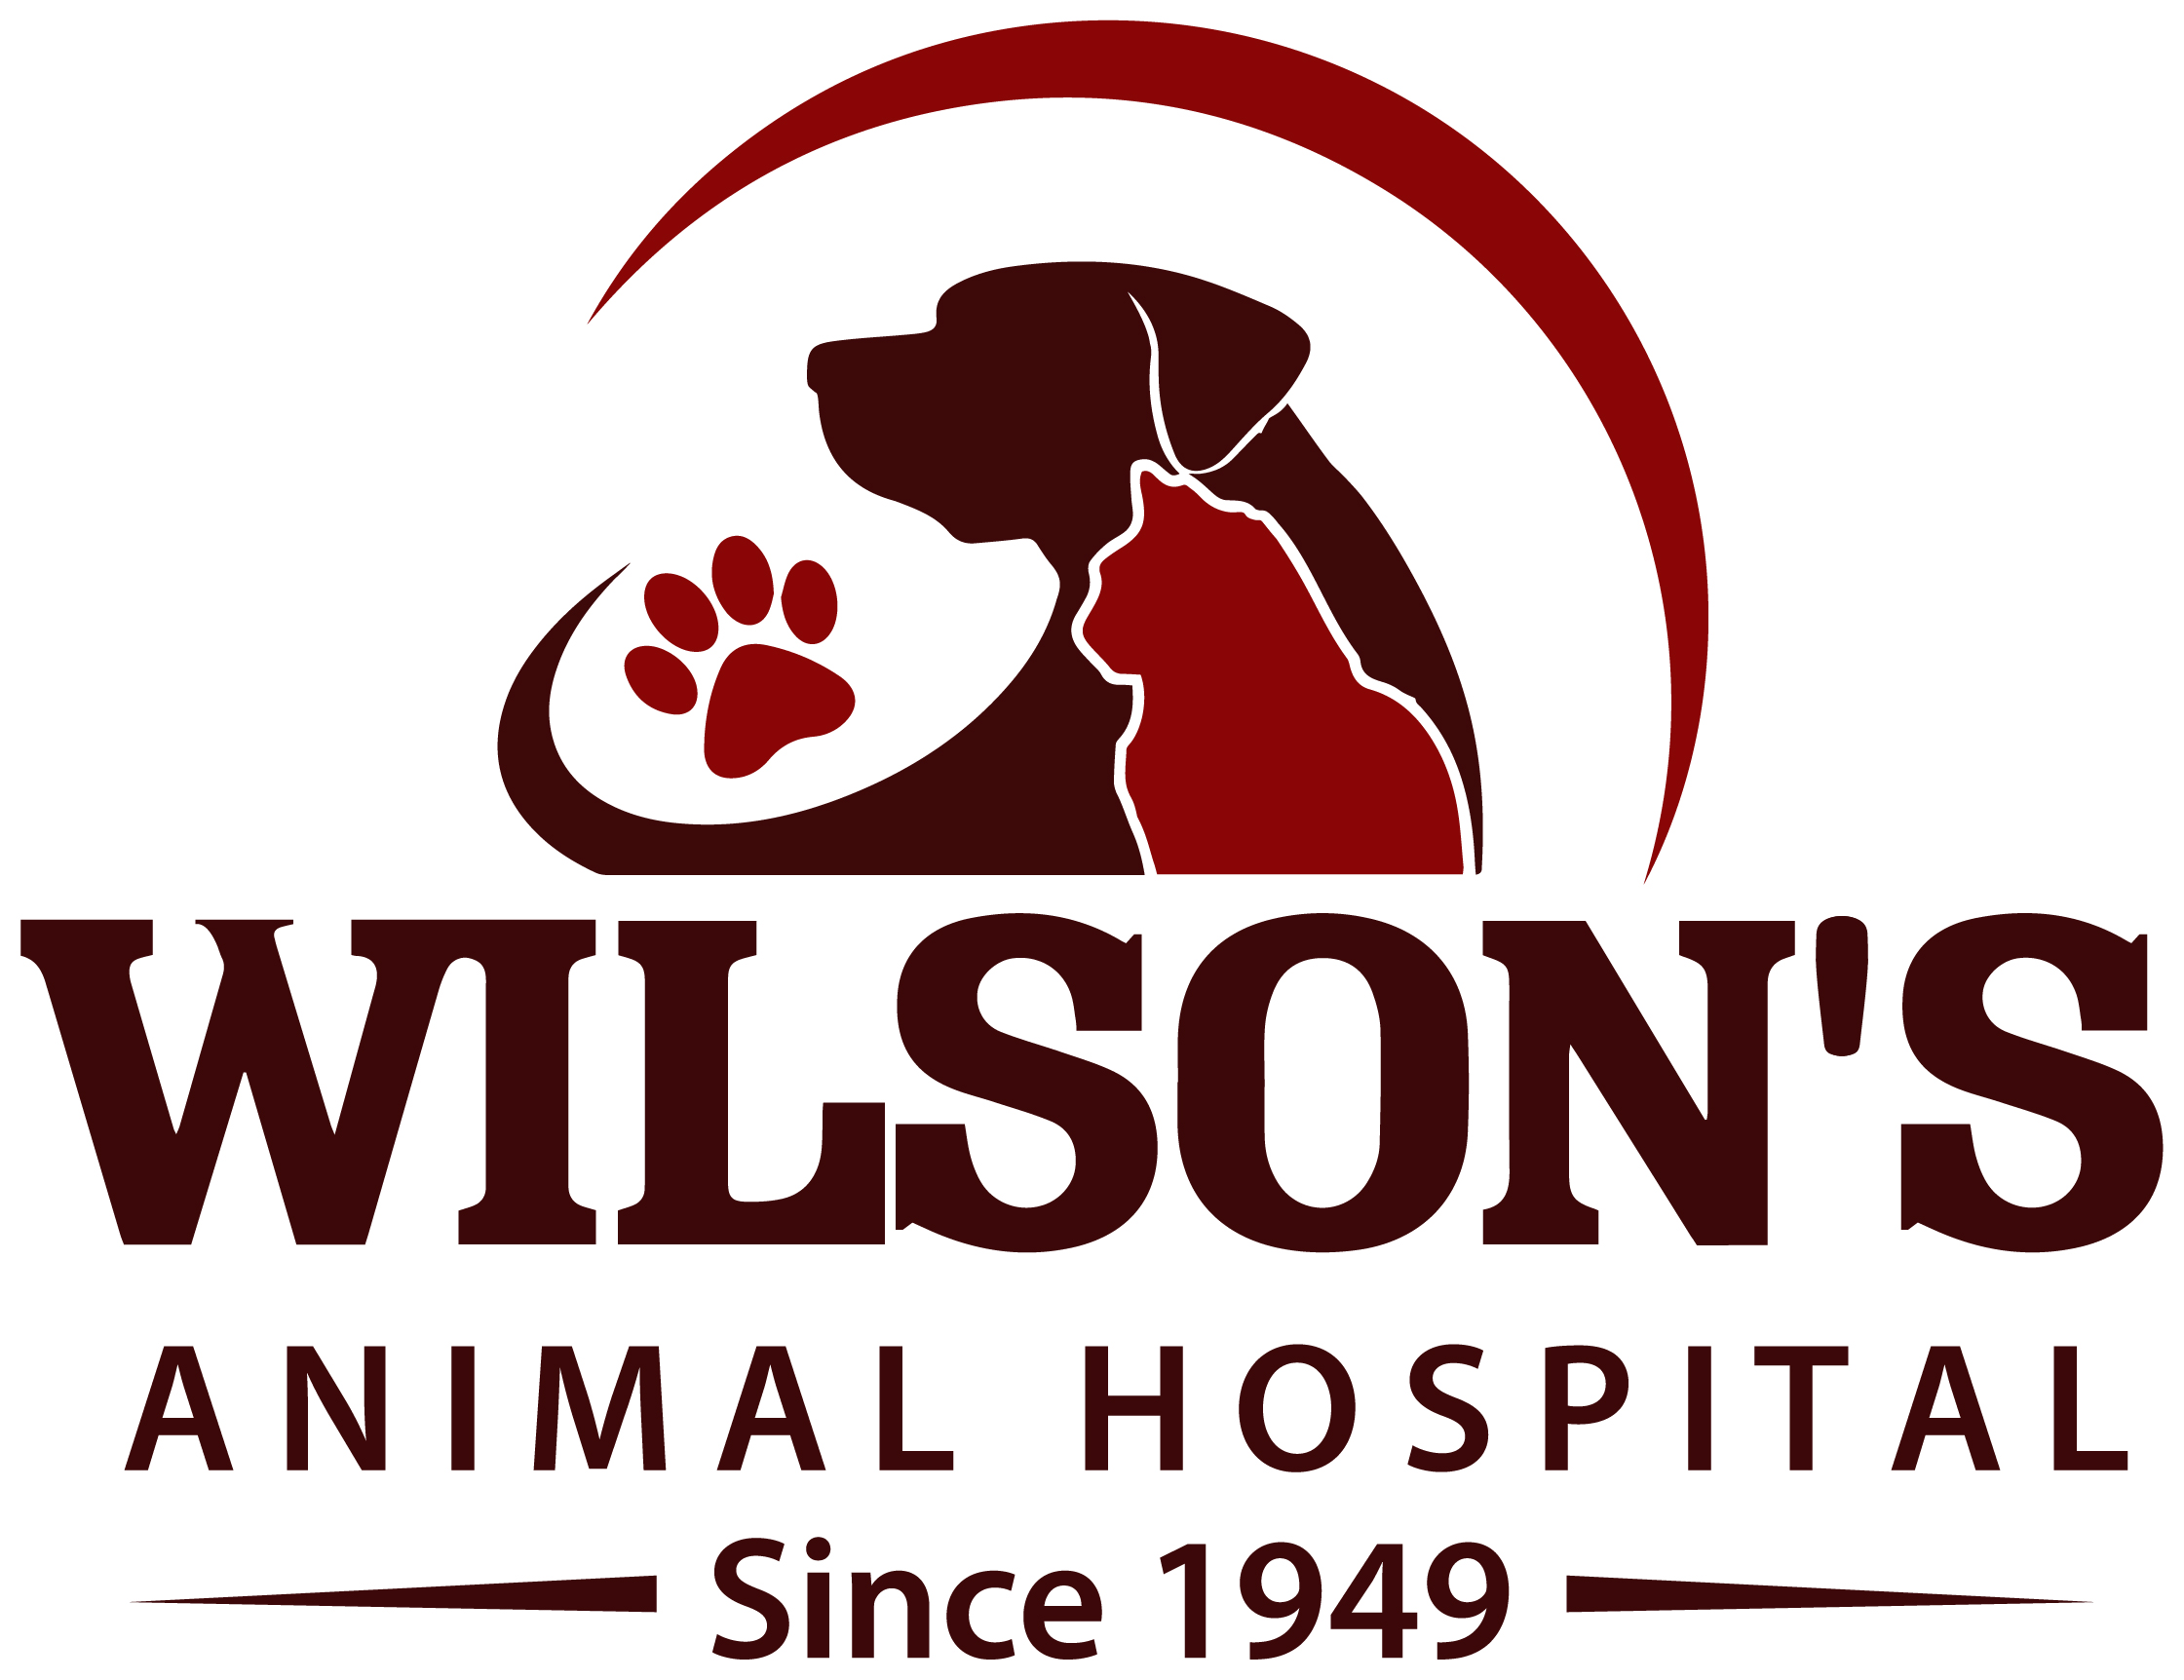 Wilson's Animal Hospital